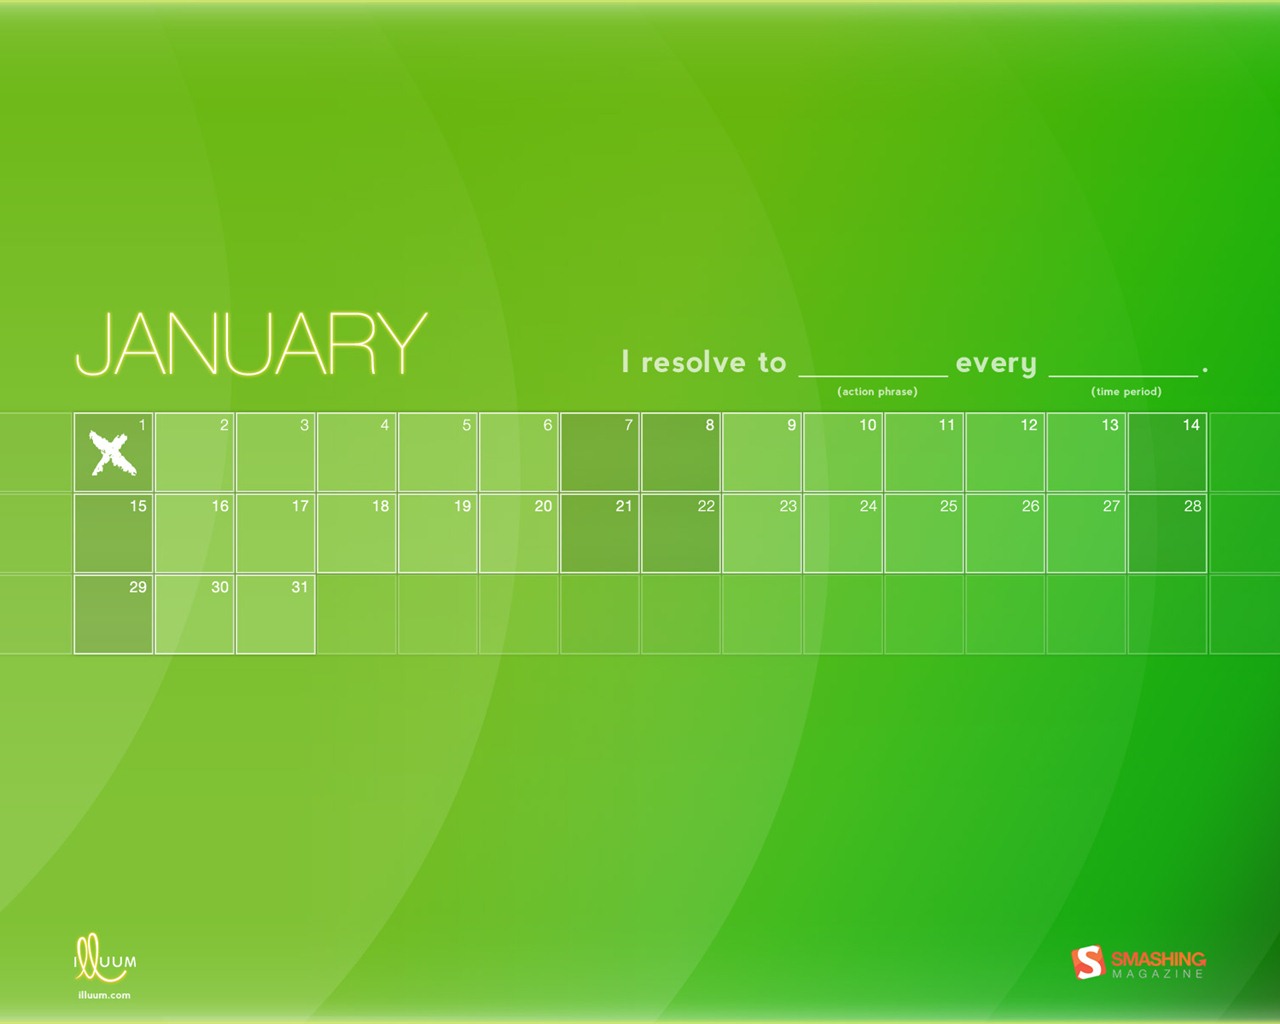 January 2012 Calendar Wallpapers #14 - 1280x1024